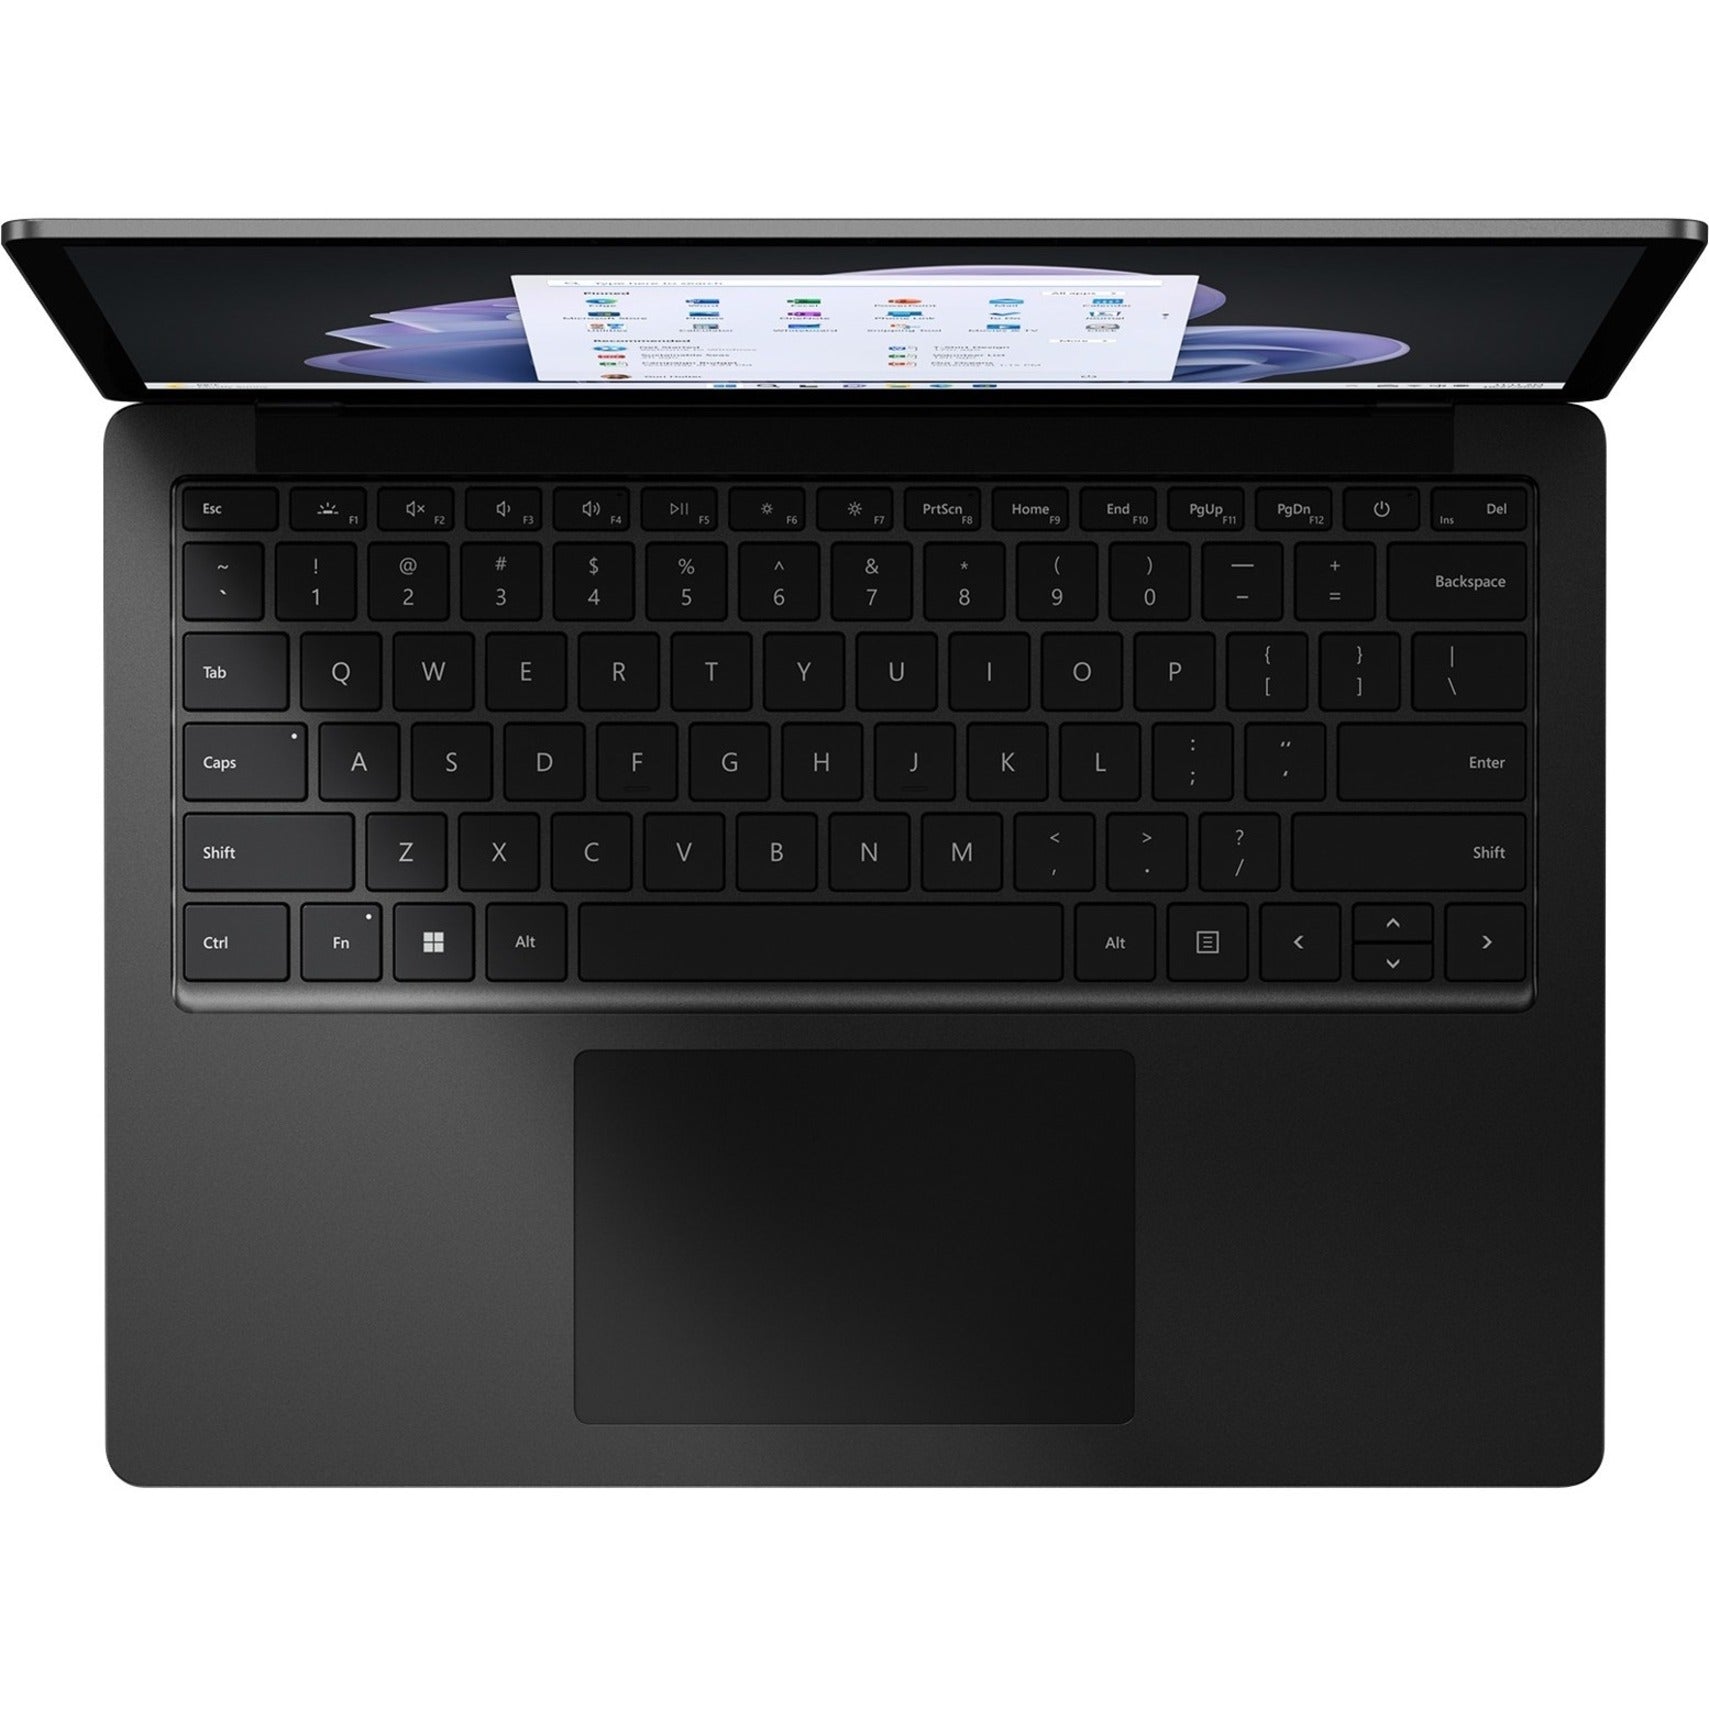 Microsoft R1M-00002 Surface Laptop 5 Notebook, 13.5" Touchscreen, Core i5, 8GB RAM, 256GB SSD, Windows 10 Pro